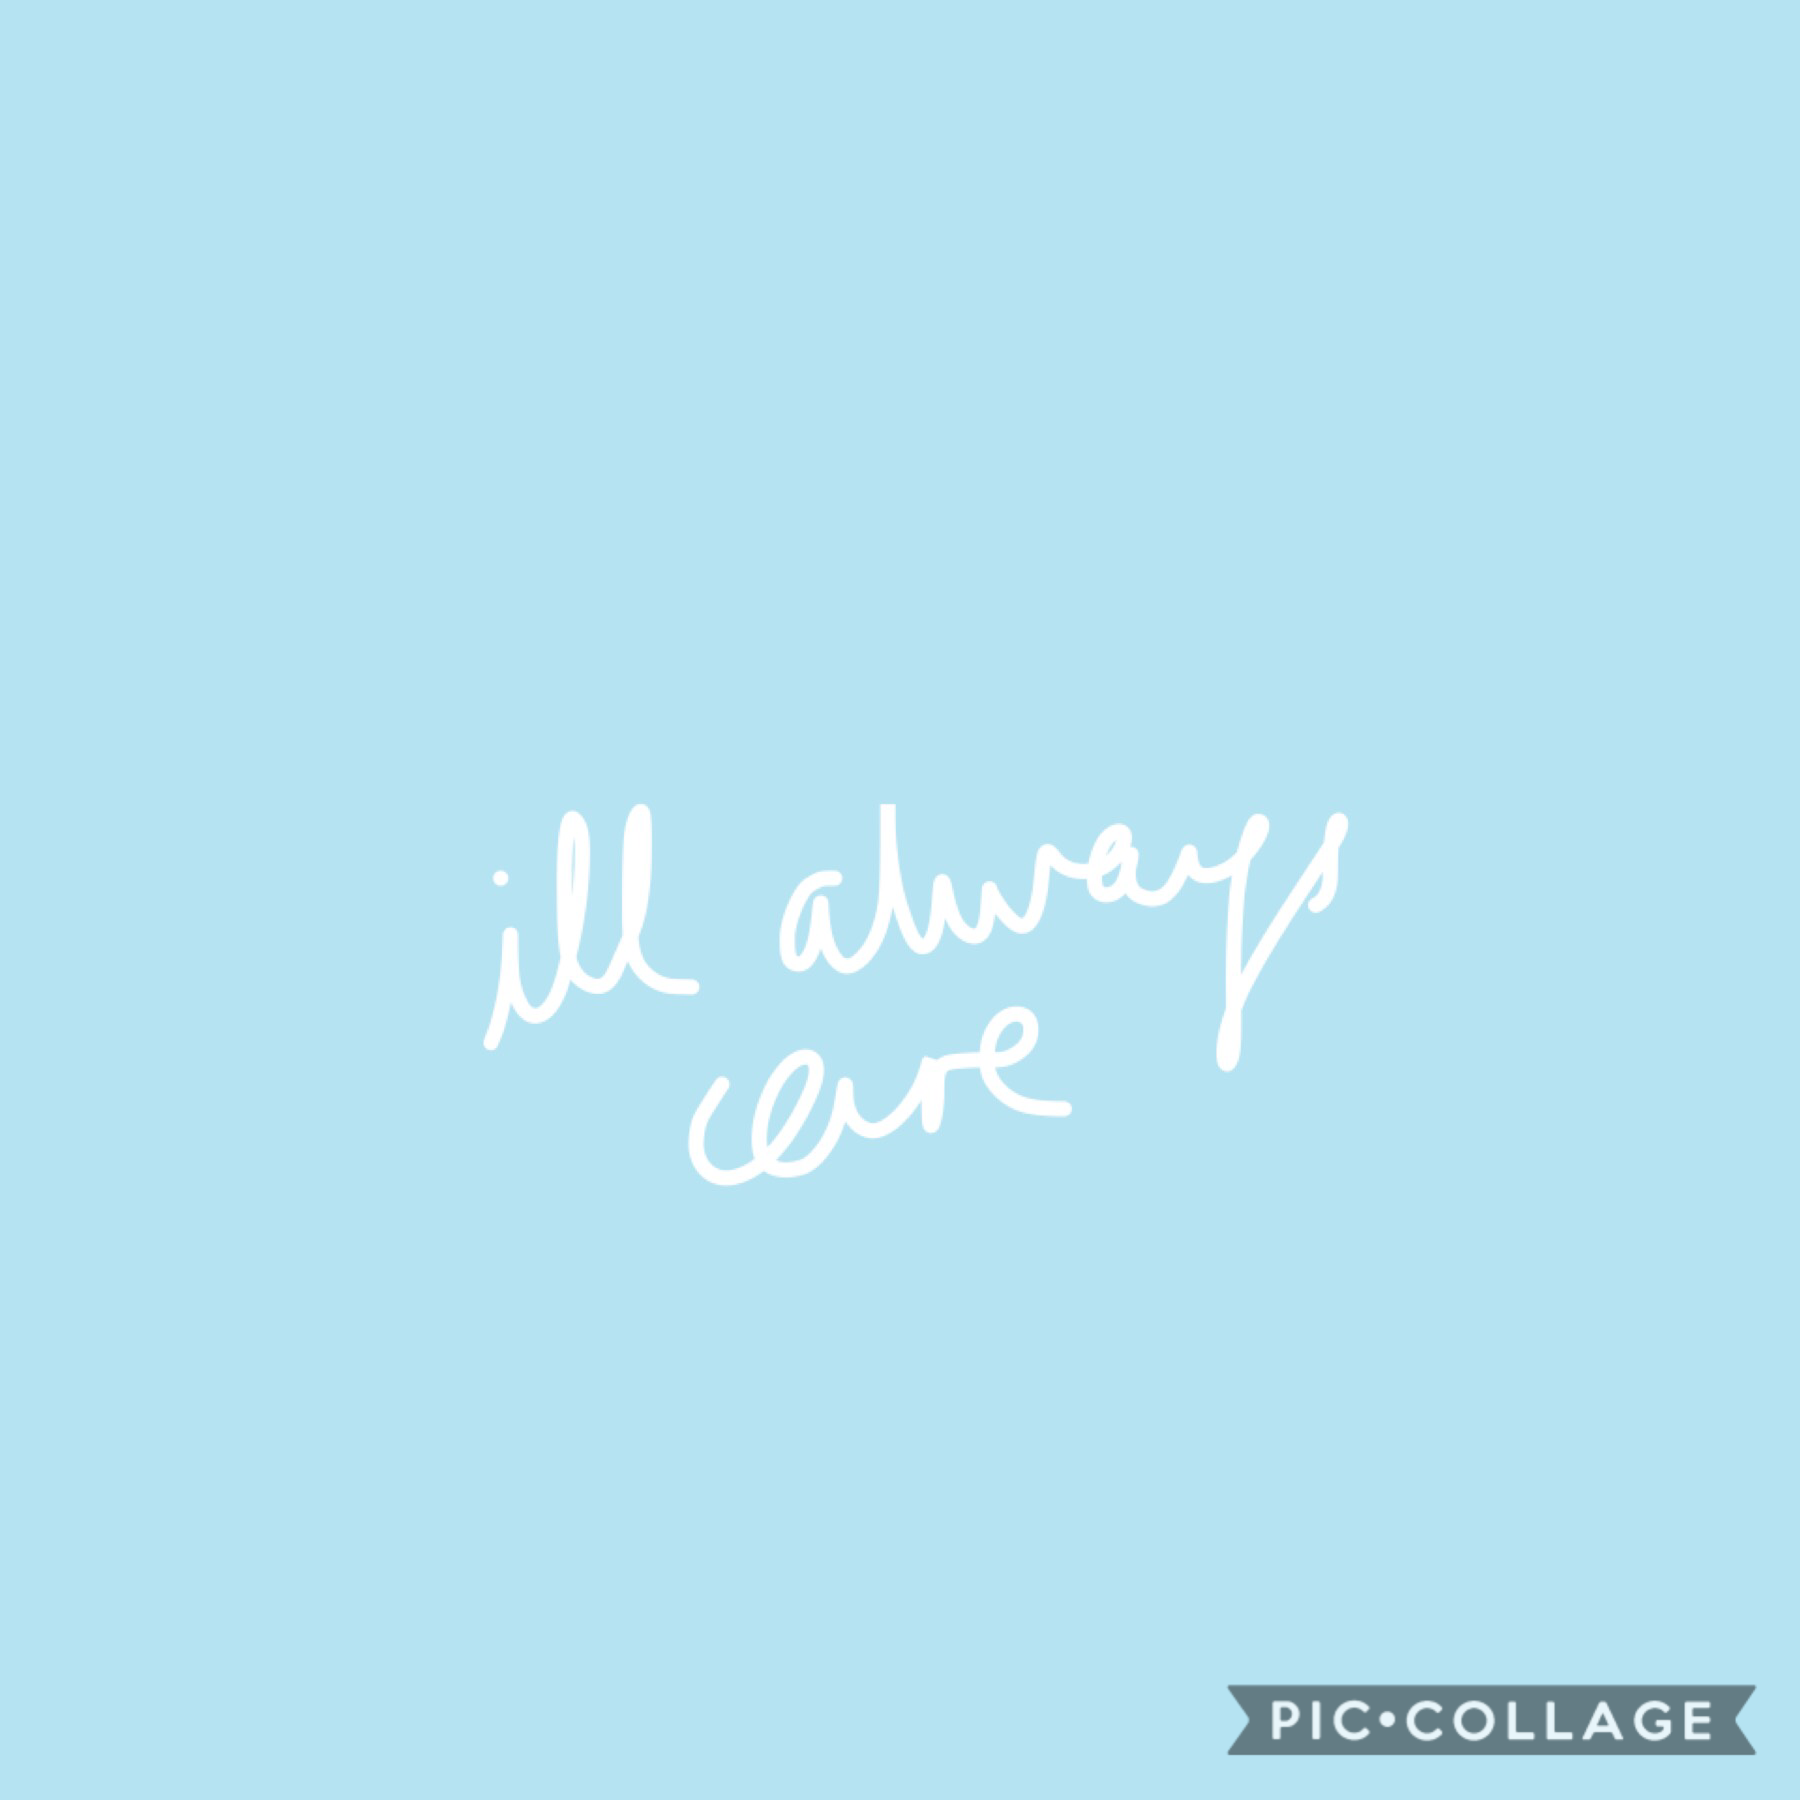 always will